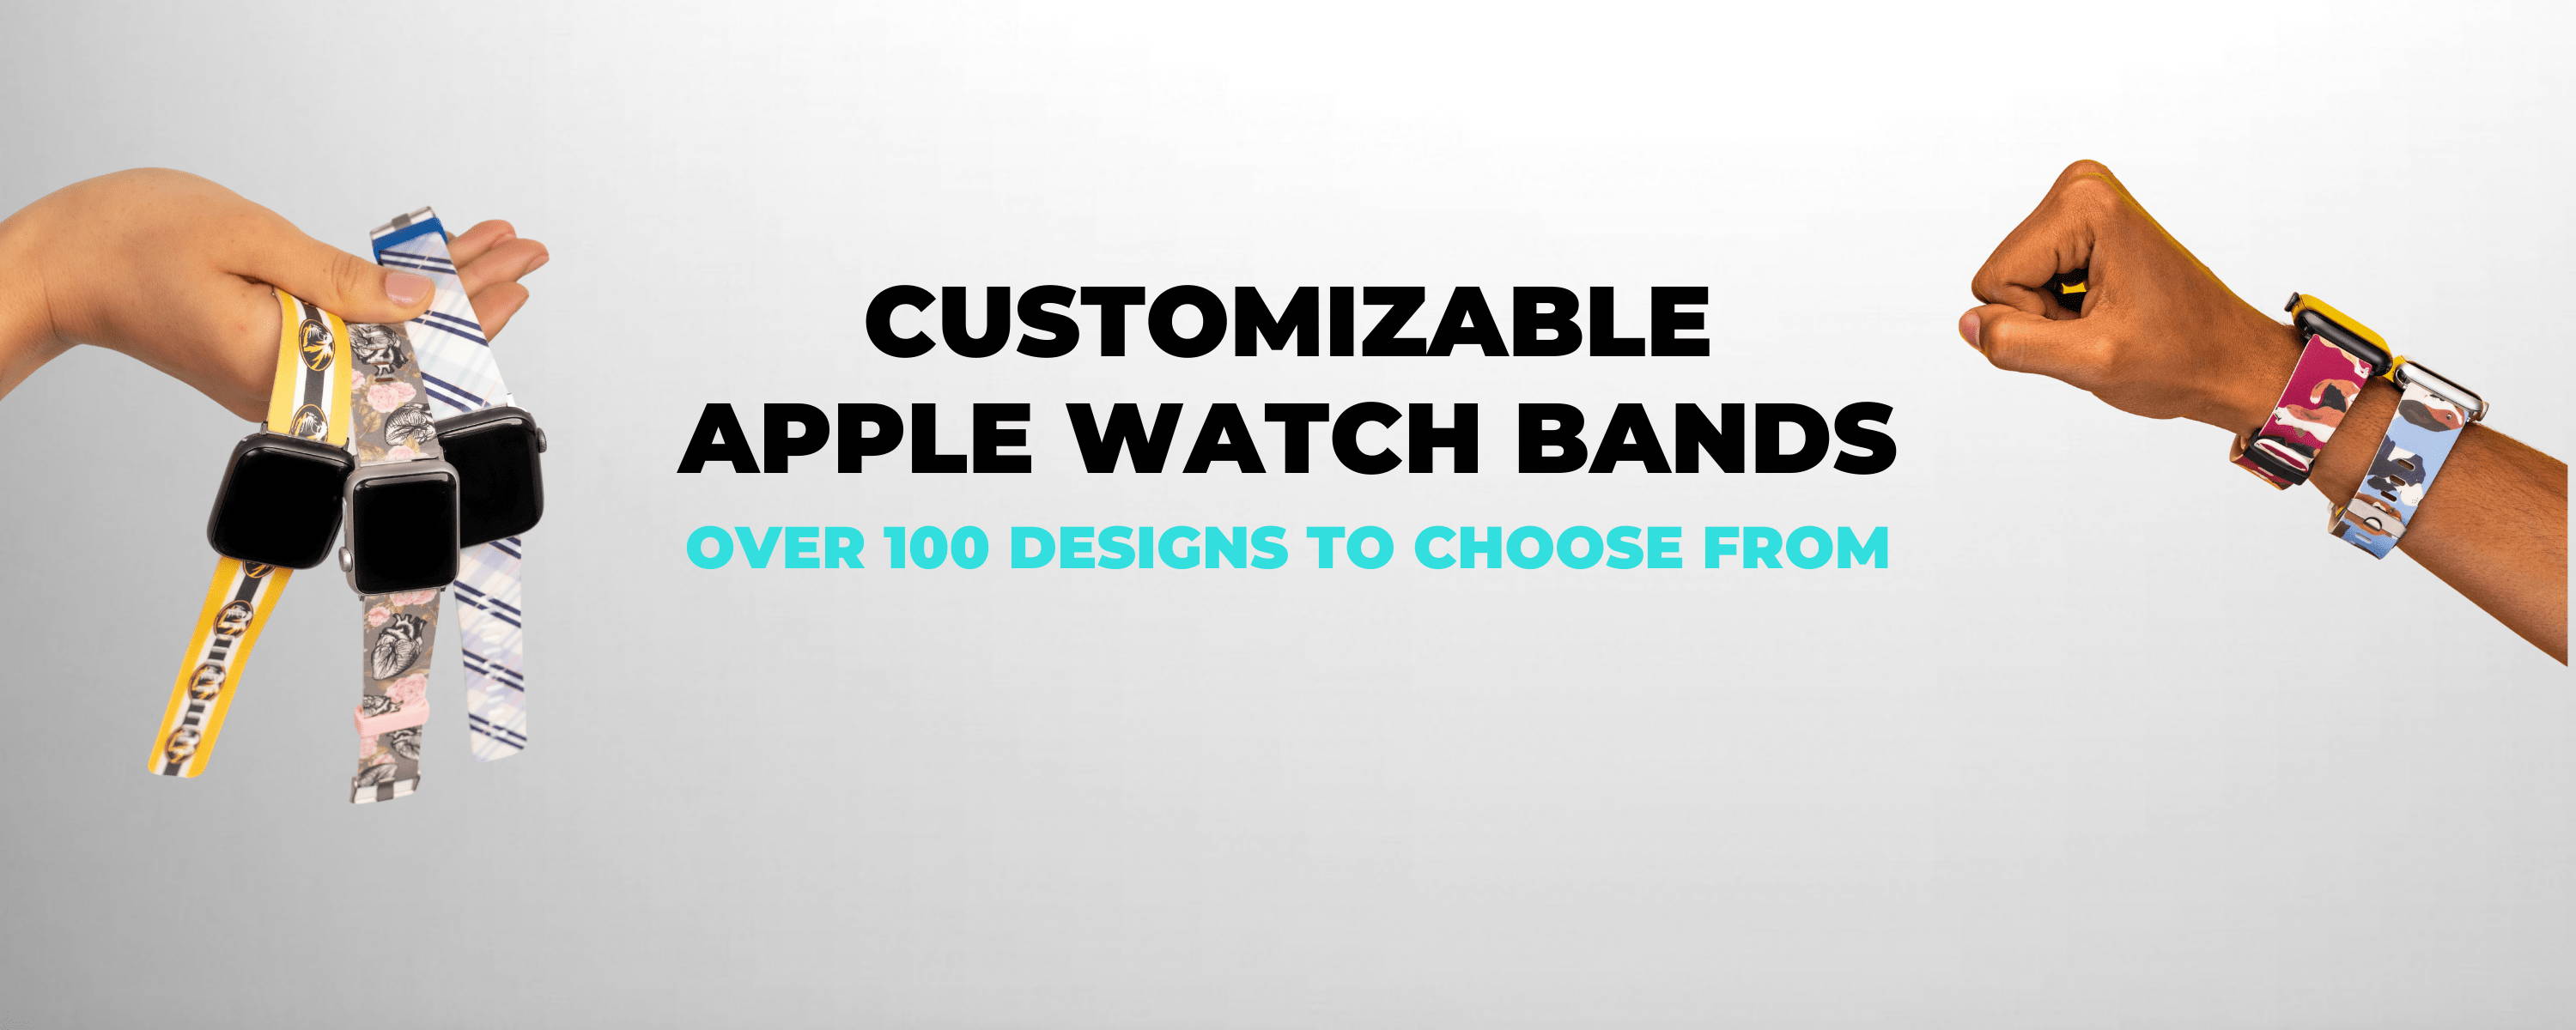 c4 apple watches customized